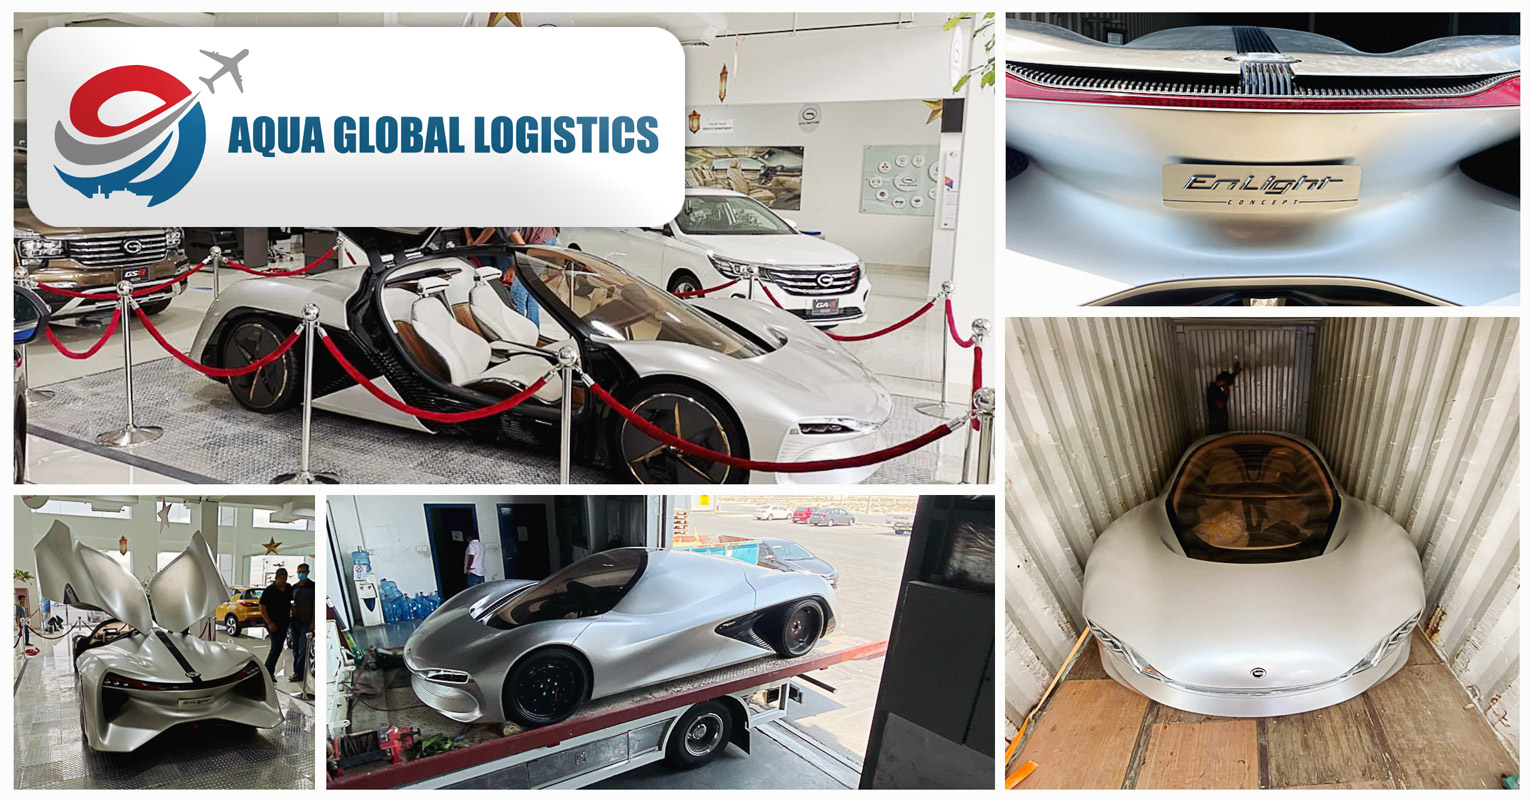 Aqua Global Logistics Transported a Work of Art, the GAC Motor Enlight Concept Car